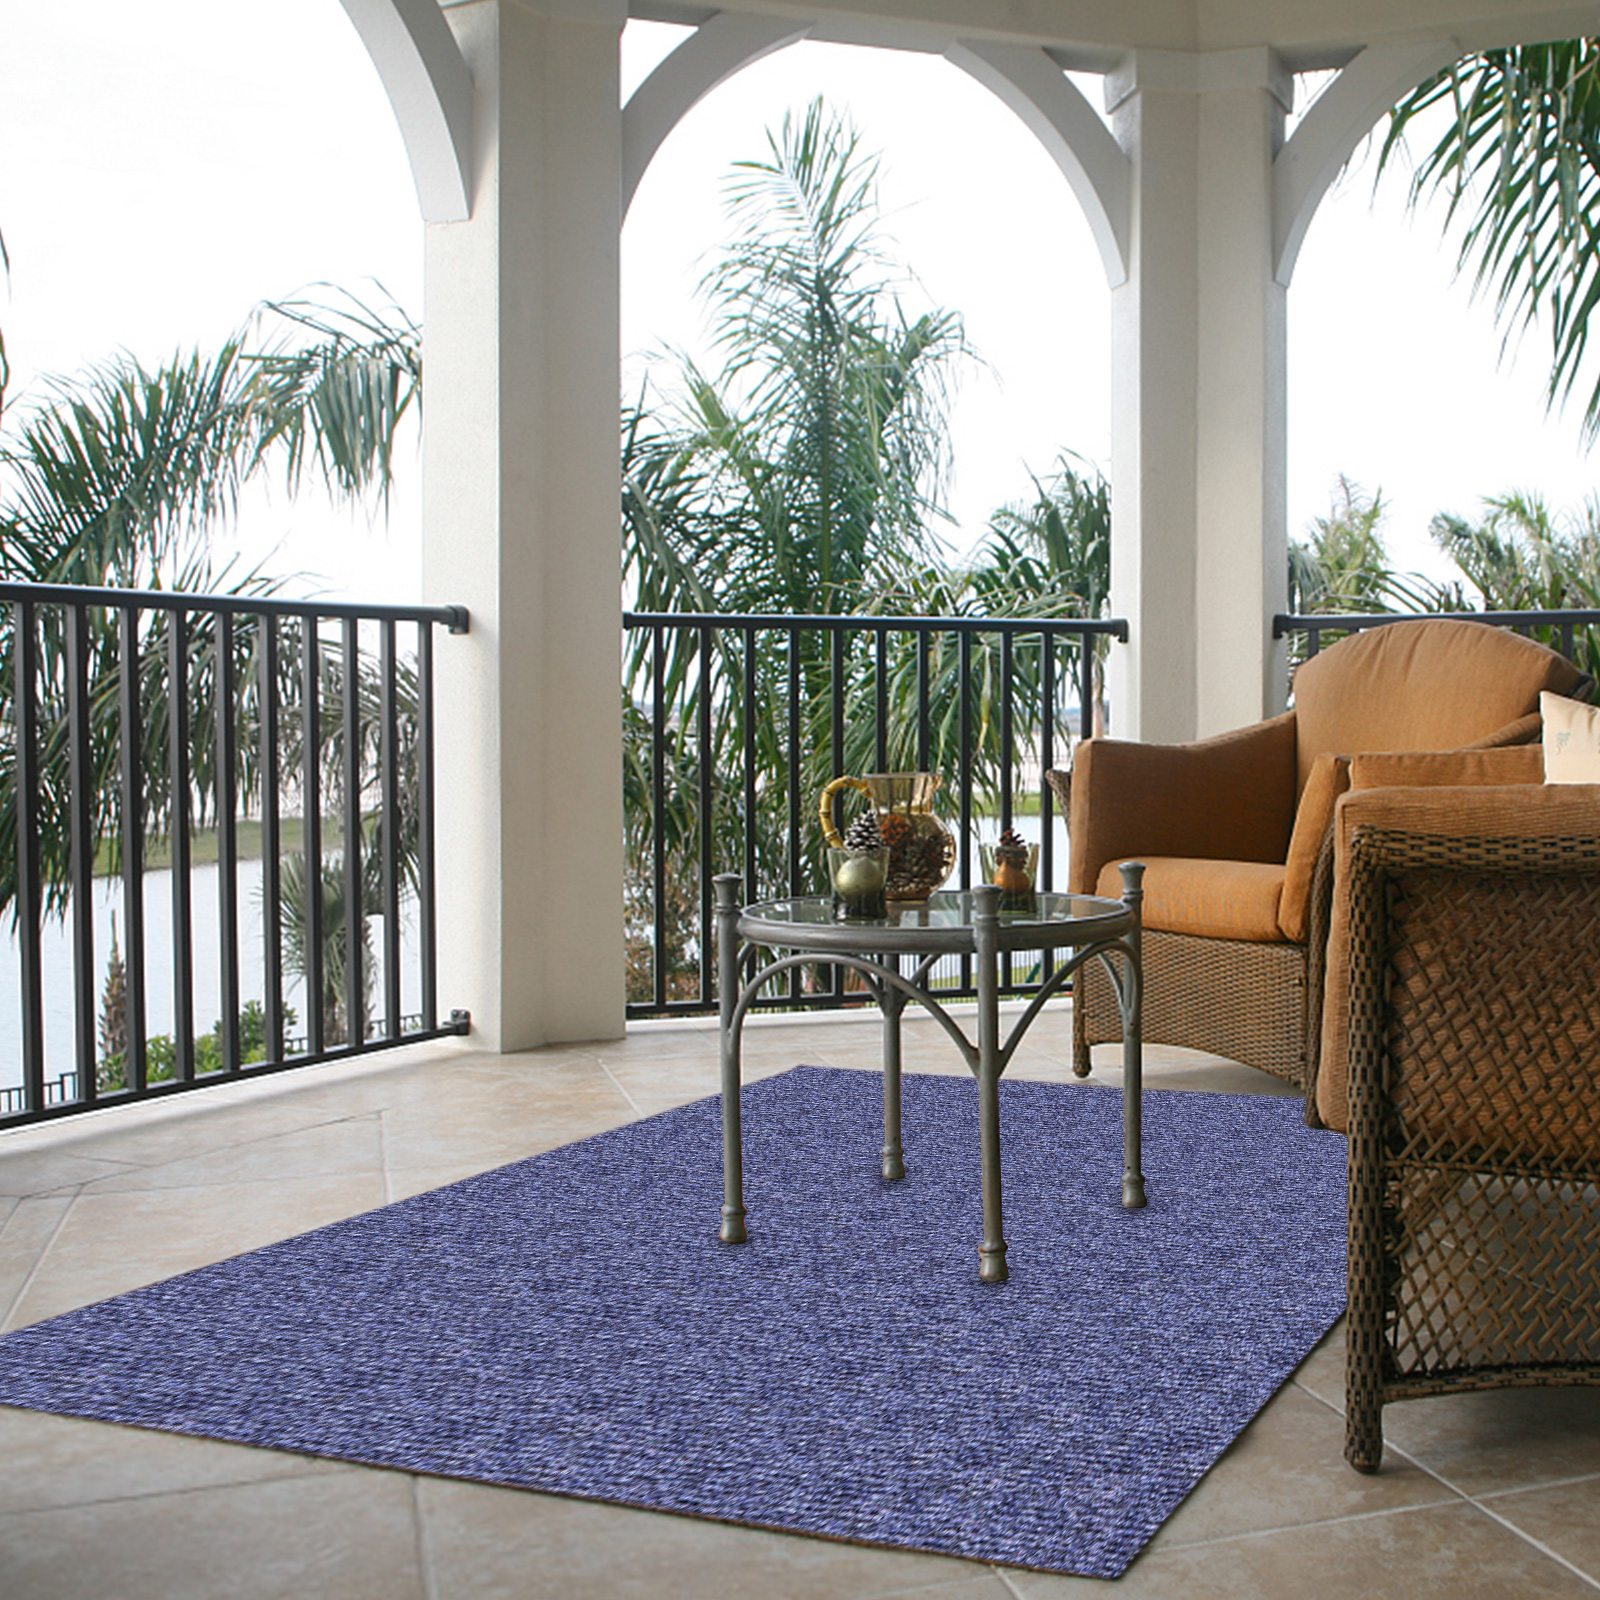 Bass Boat Carpet Marine Carpet 6' Wide Outdoor Rug for Patio Porch Deck